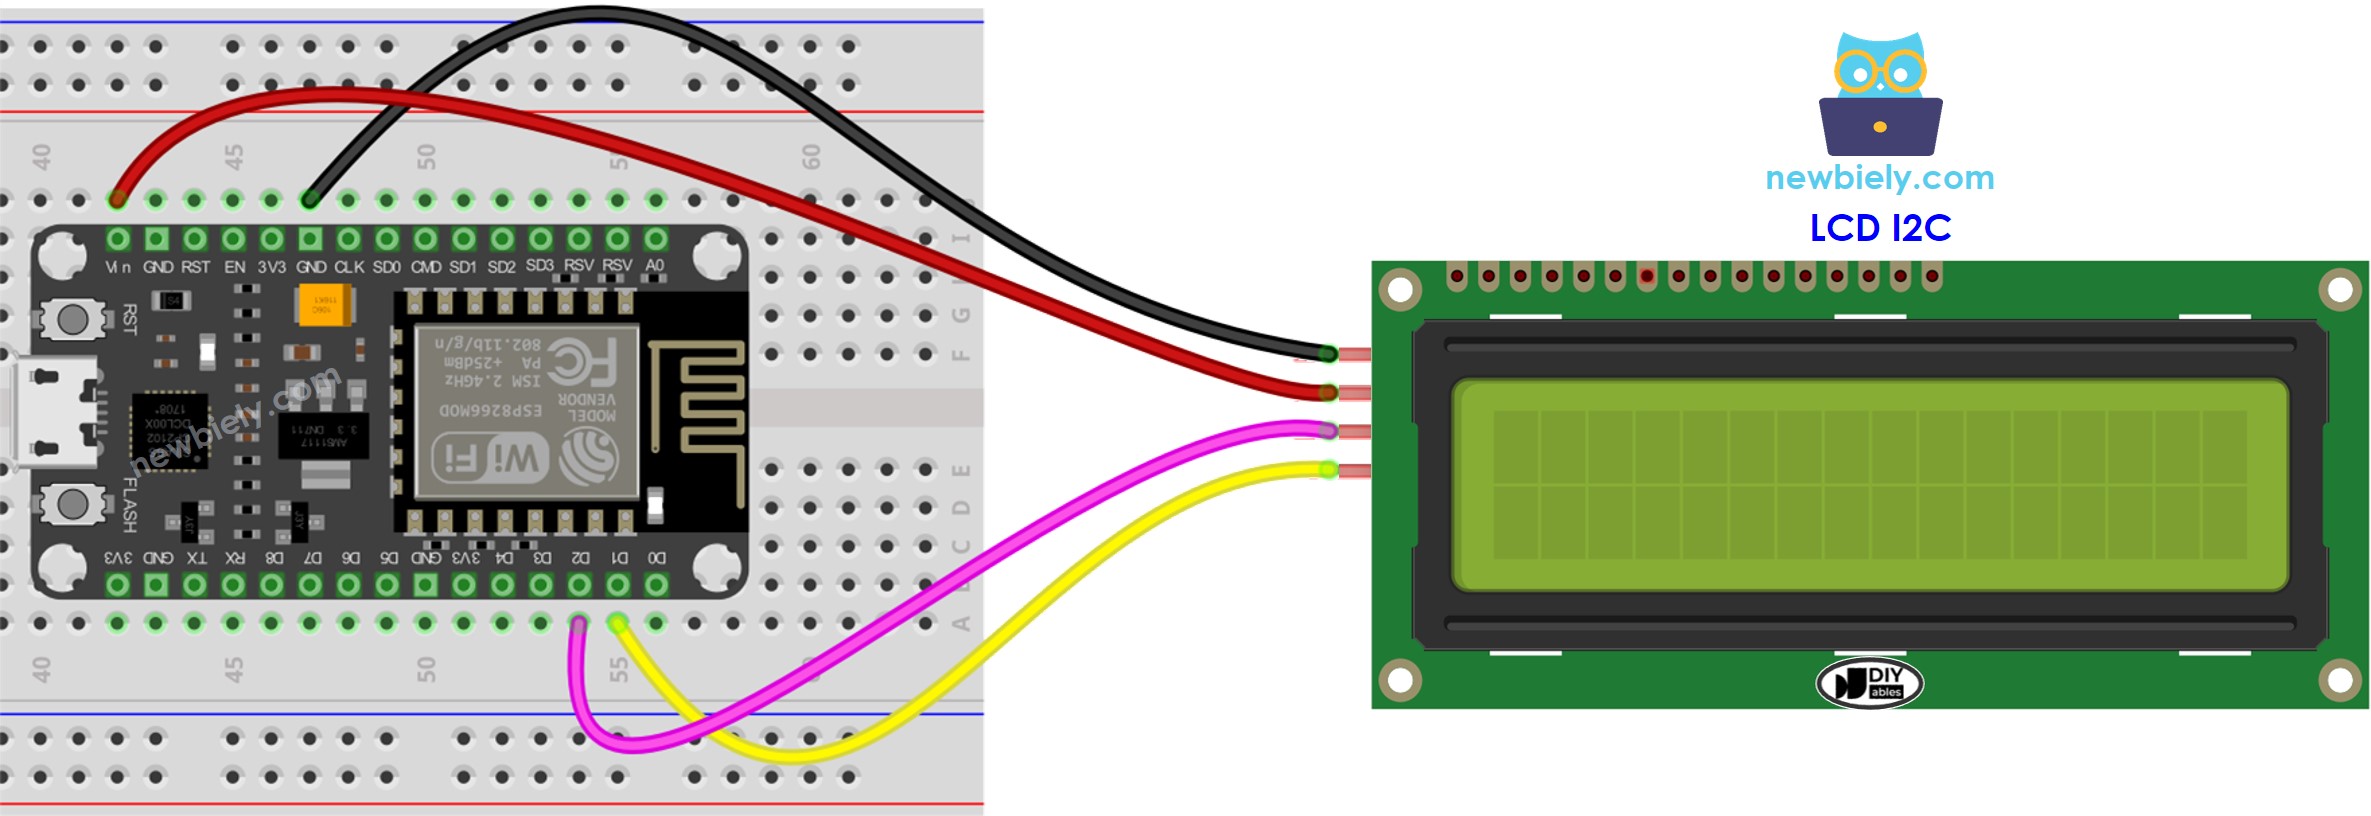 The wiring diagram between ESP8266 NodeMCU and LCD I2C